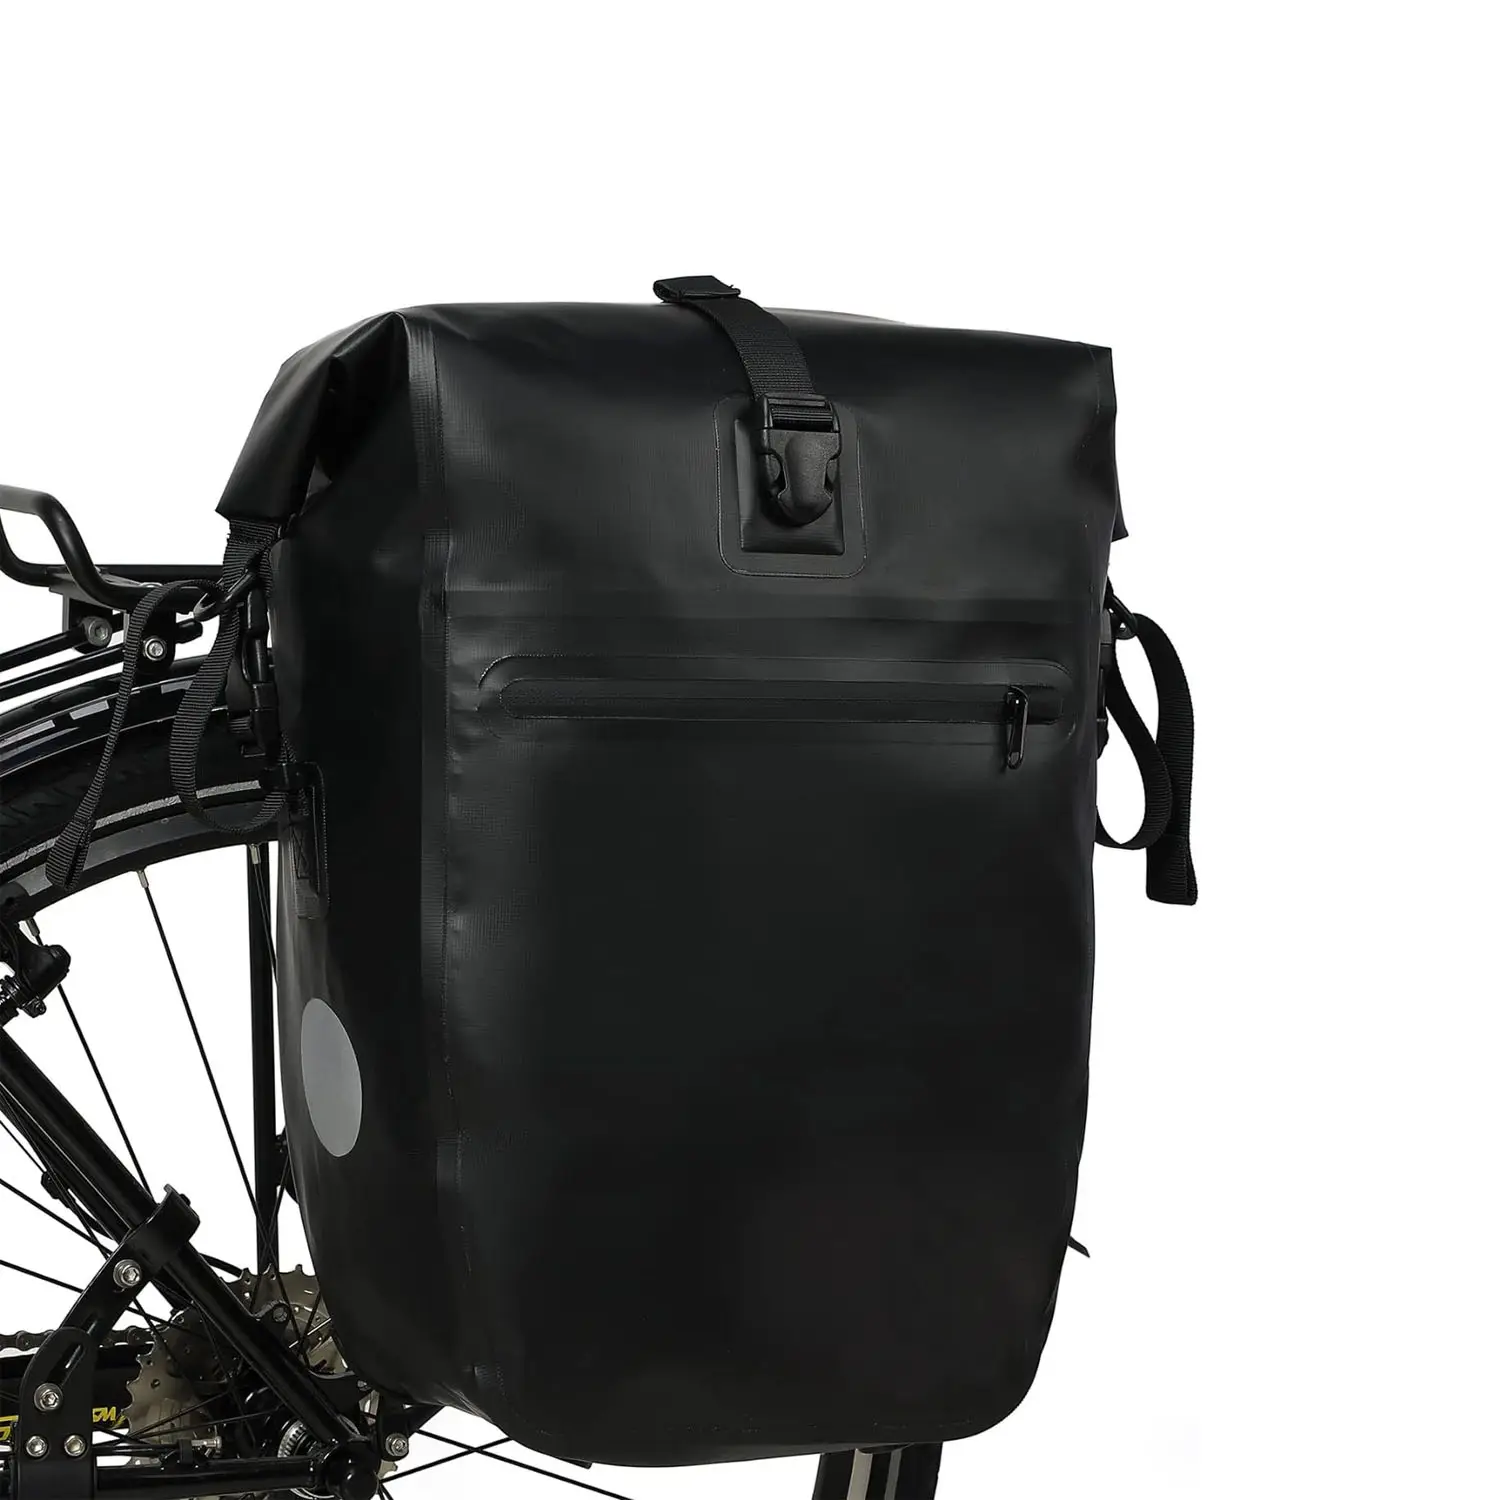 Actualización de accesorios impermeables para bicicleta, bolsa de asiento trasero, maletero, 27L, gran capacidad